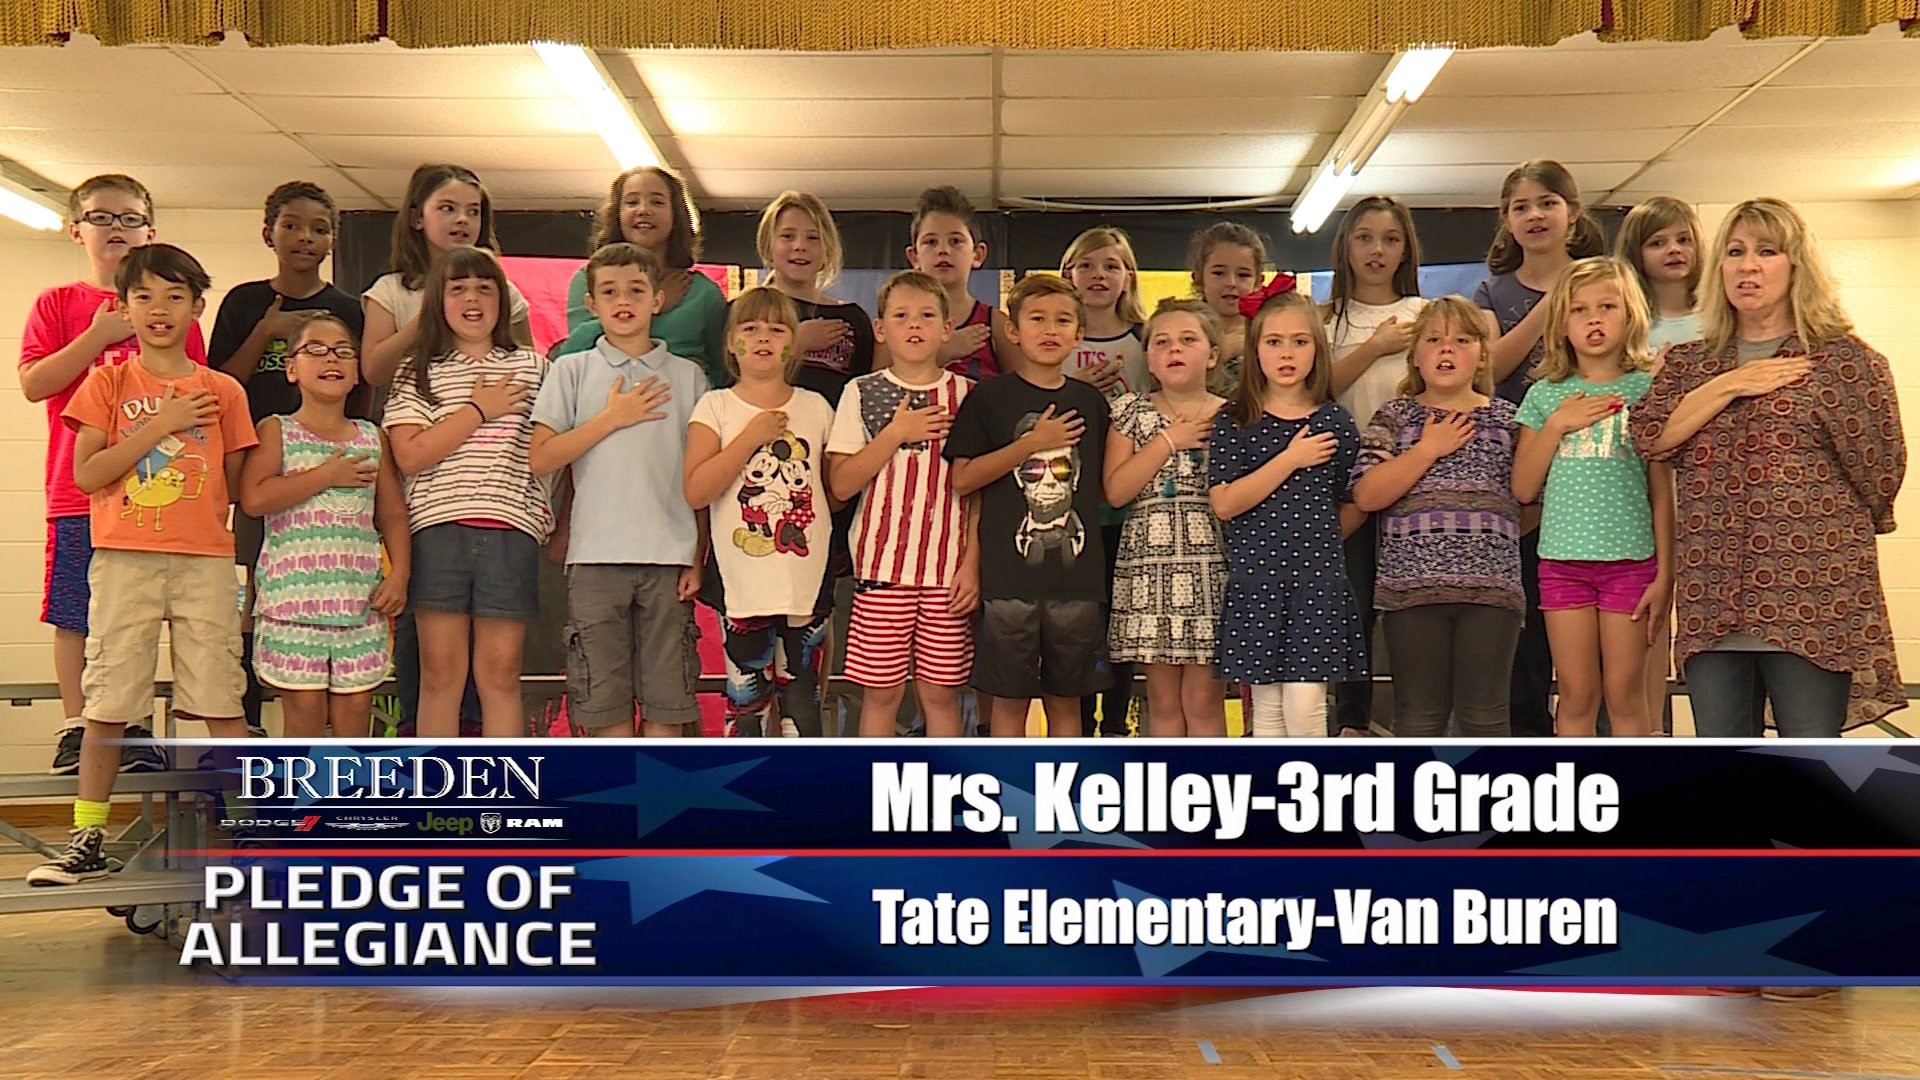 Mrs. Kelley  3rd Grade Tate Elementary, Van Buren